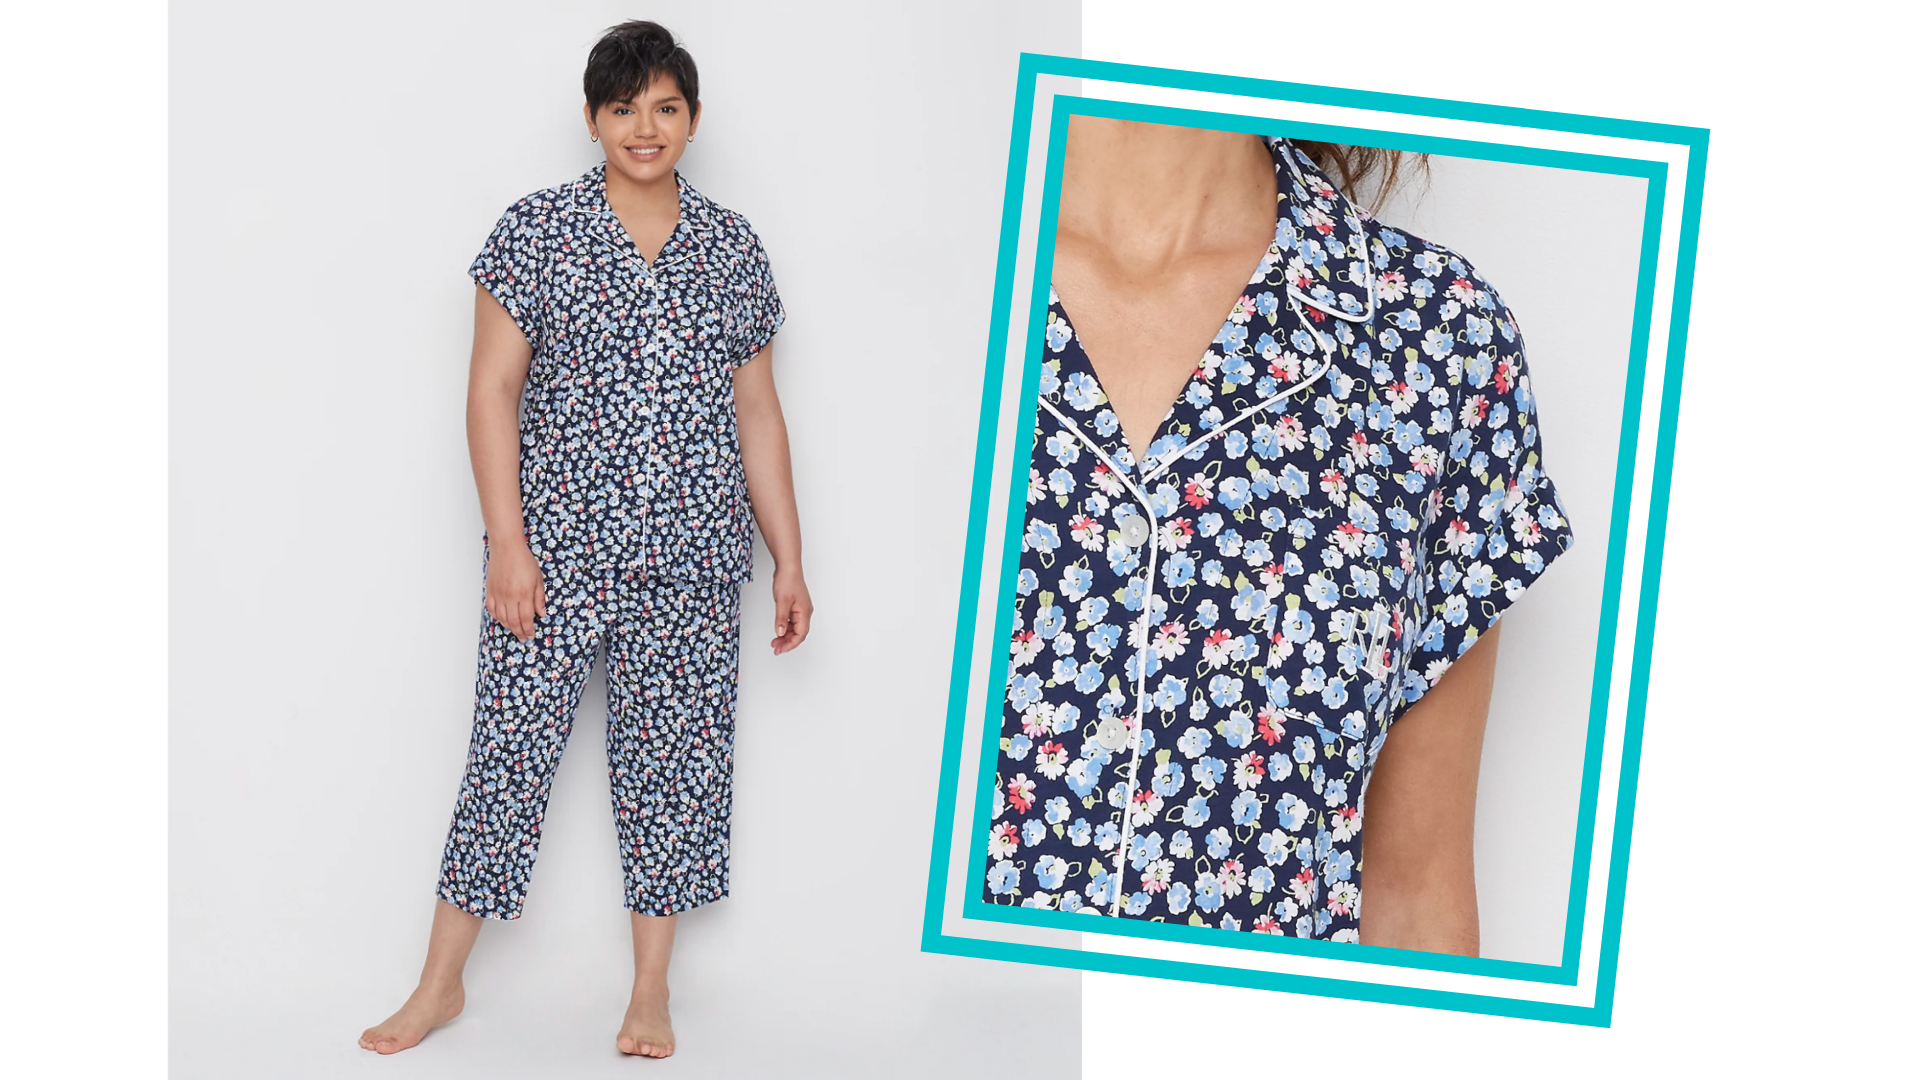 Alfani Plus Size Long-Sleeve Jersey Sleep Top, Created for Macy's - Macy's